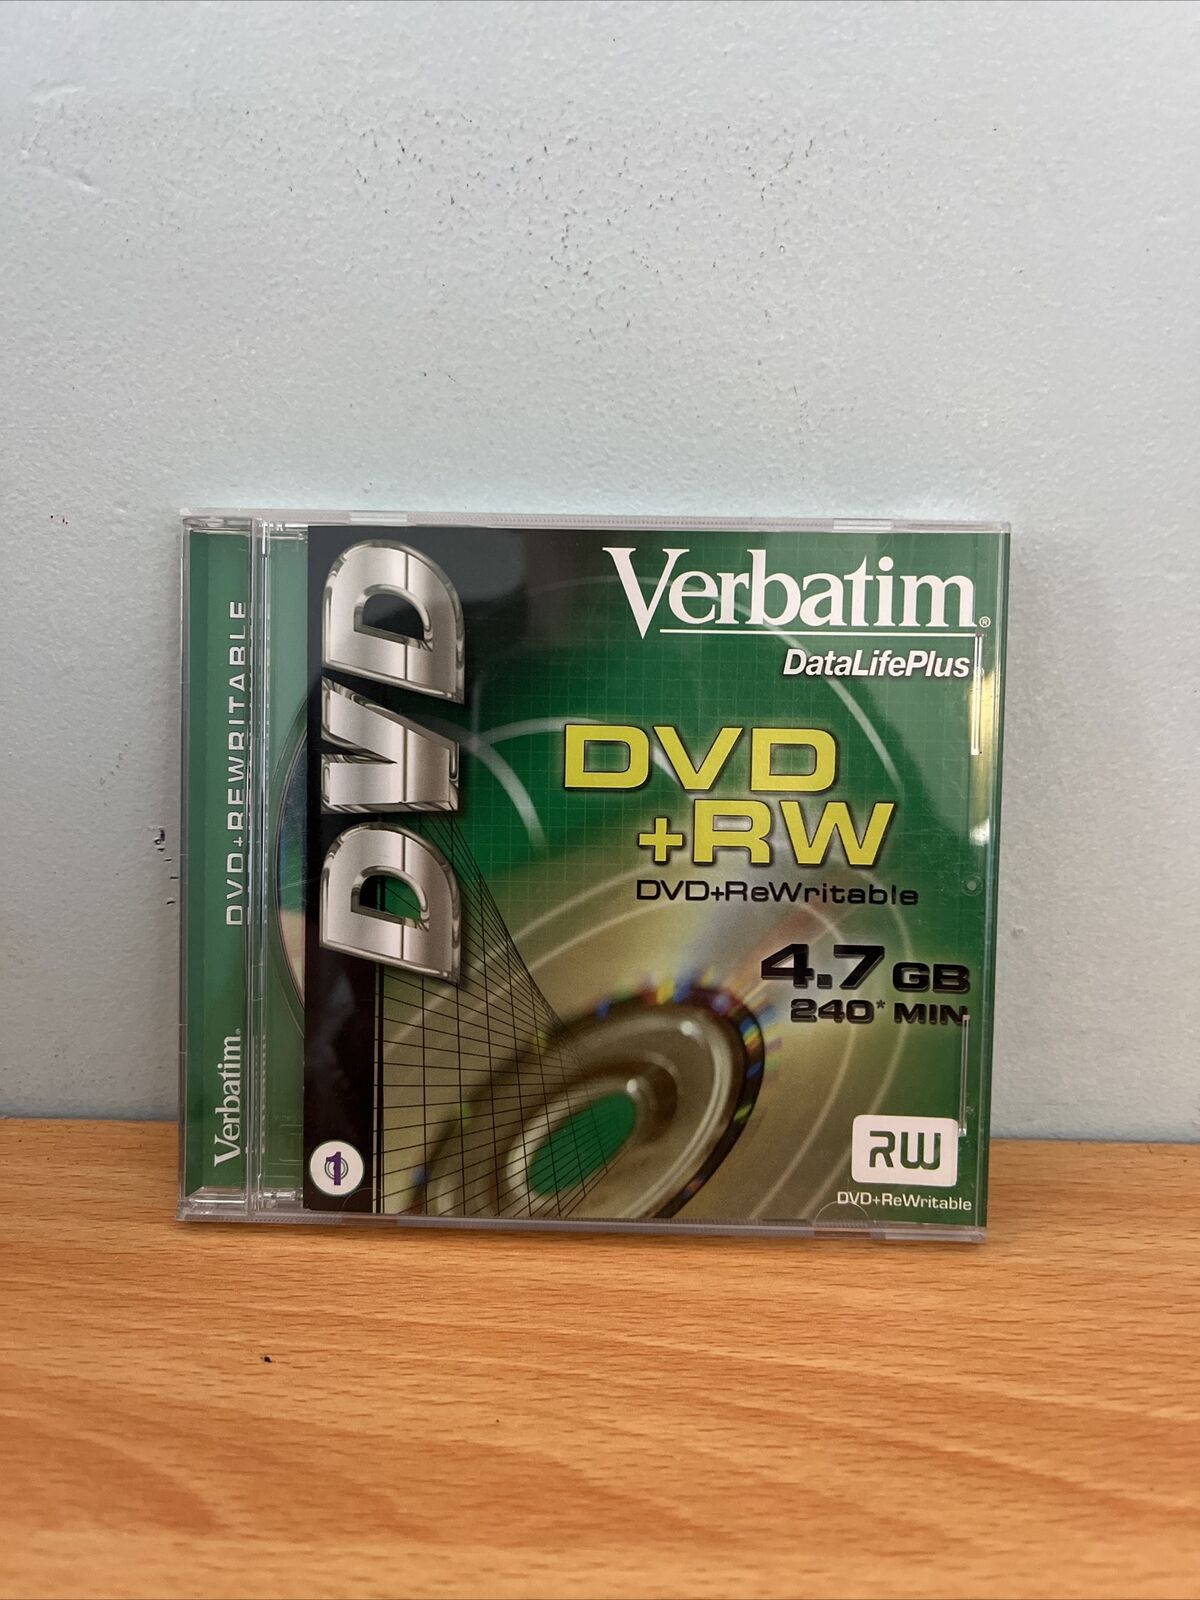 Verbatim DataLifePlus DVD+RW DVD+Rewritable 2.4x 4.7GB 120 Min